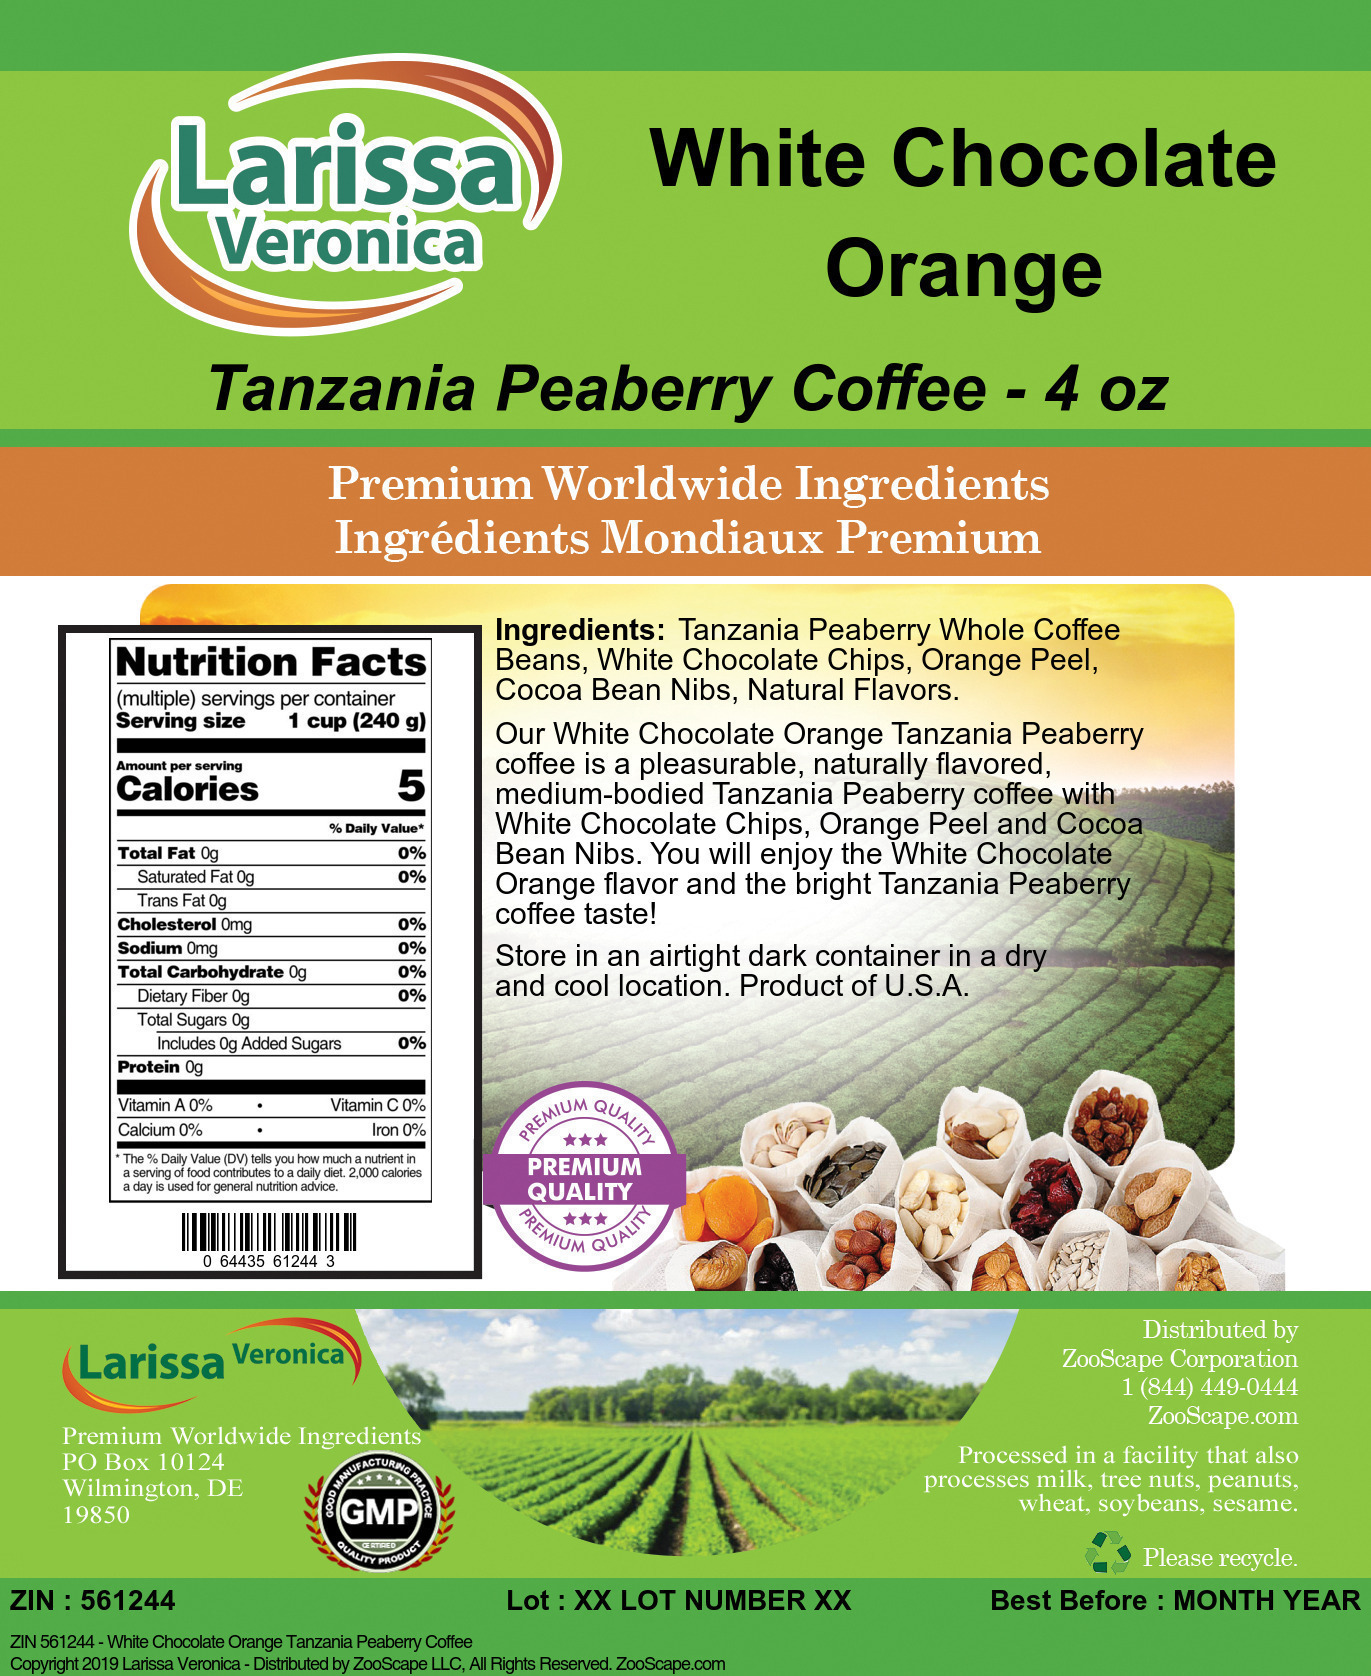 White Chocolate Orange Tanzania Peaberry Coffee - Label